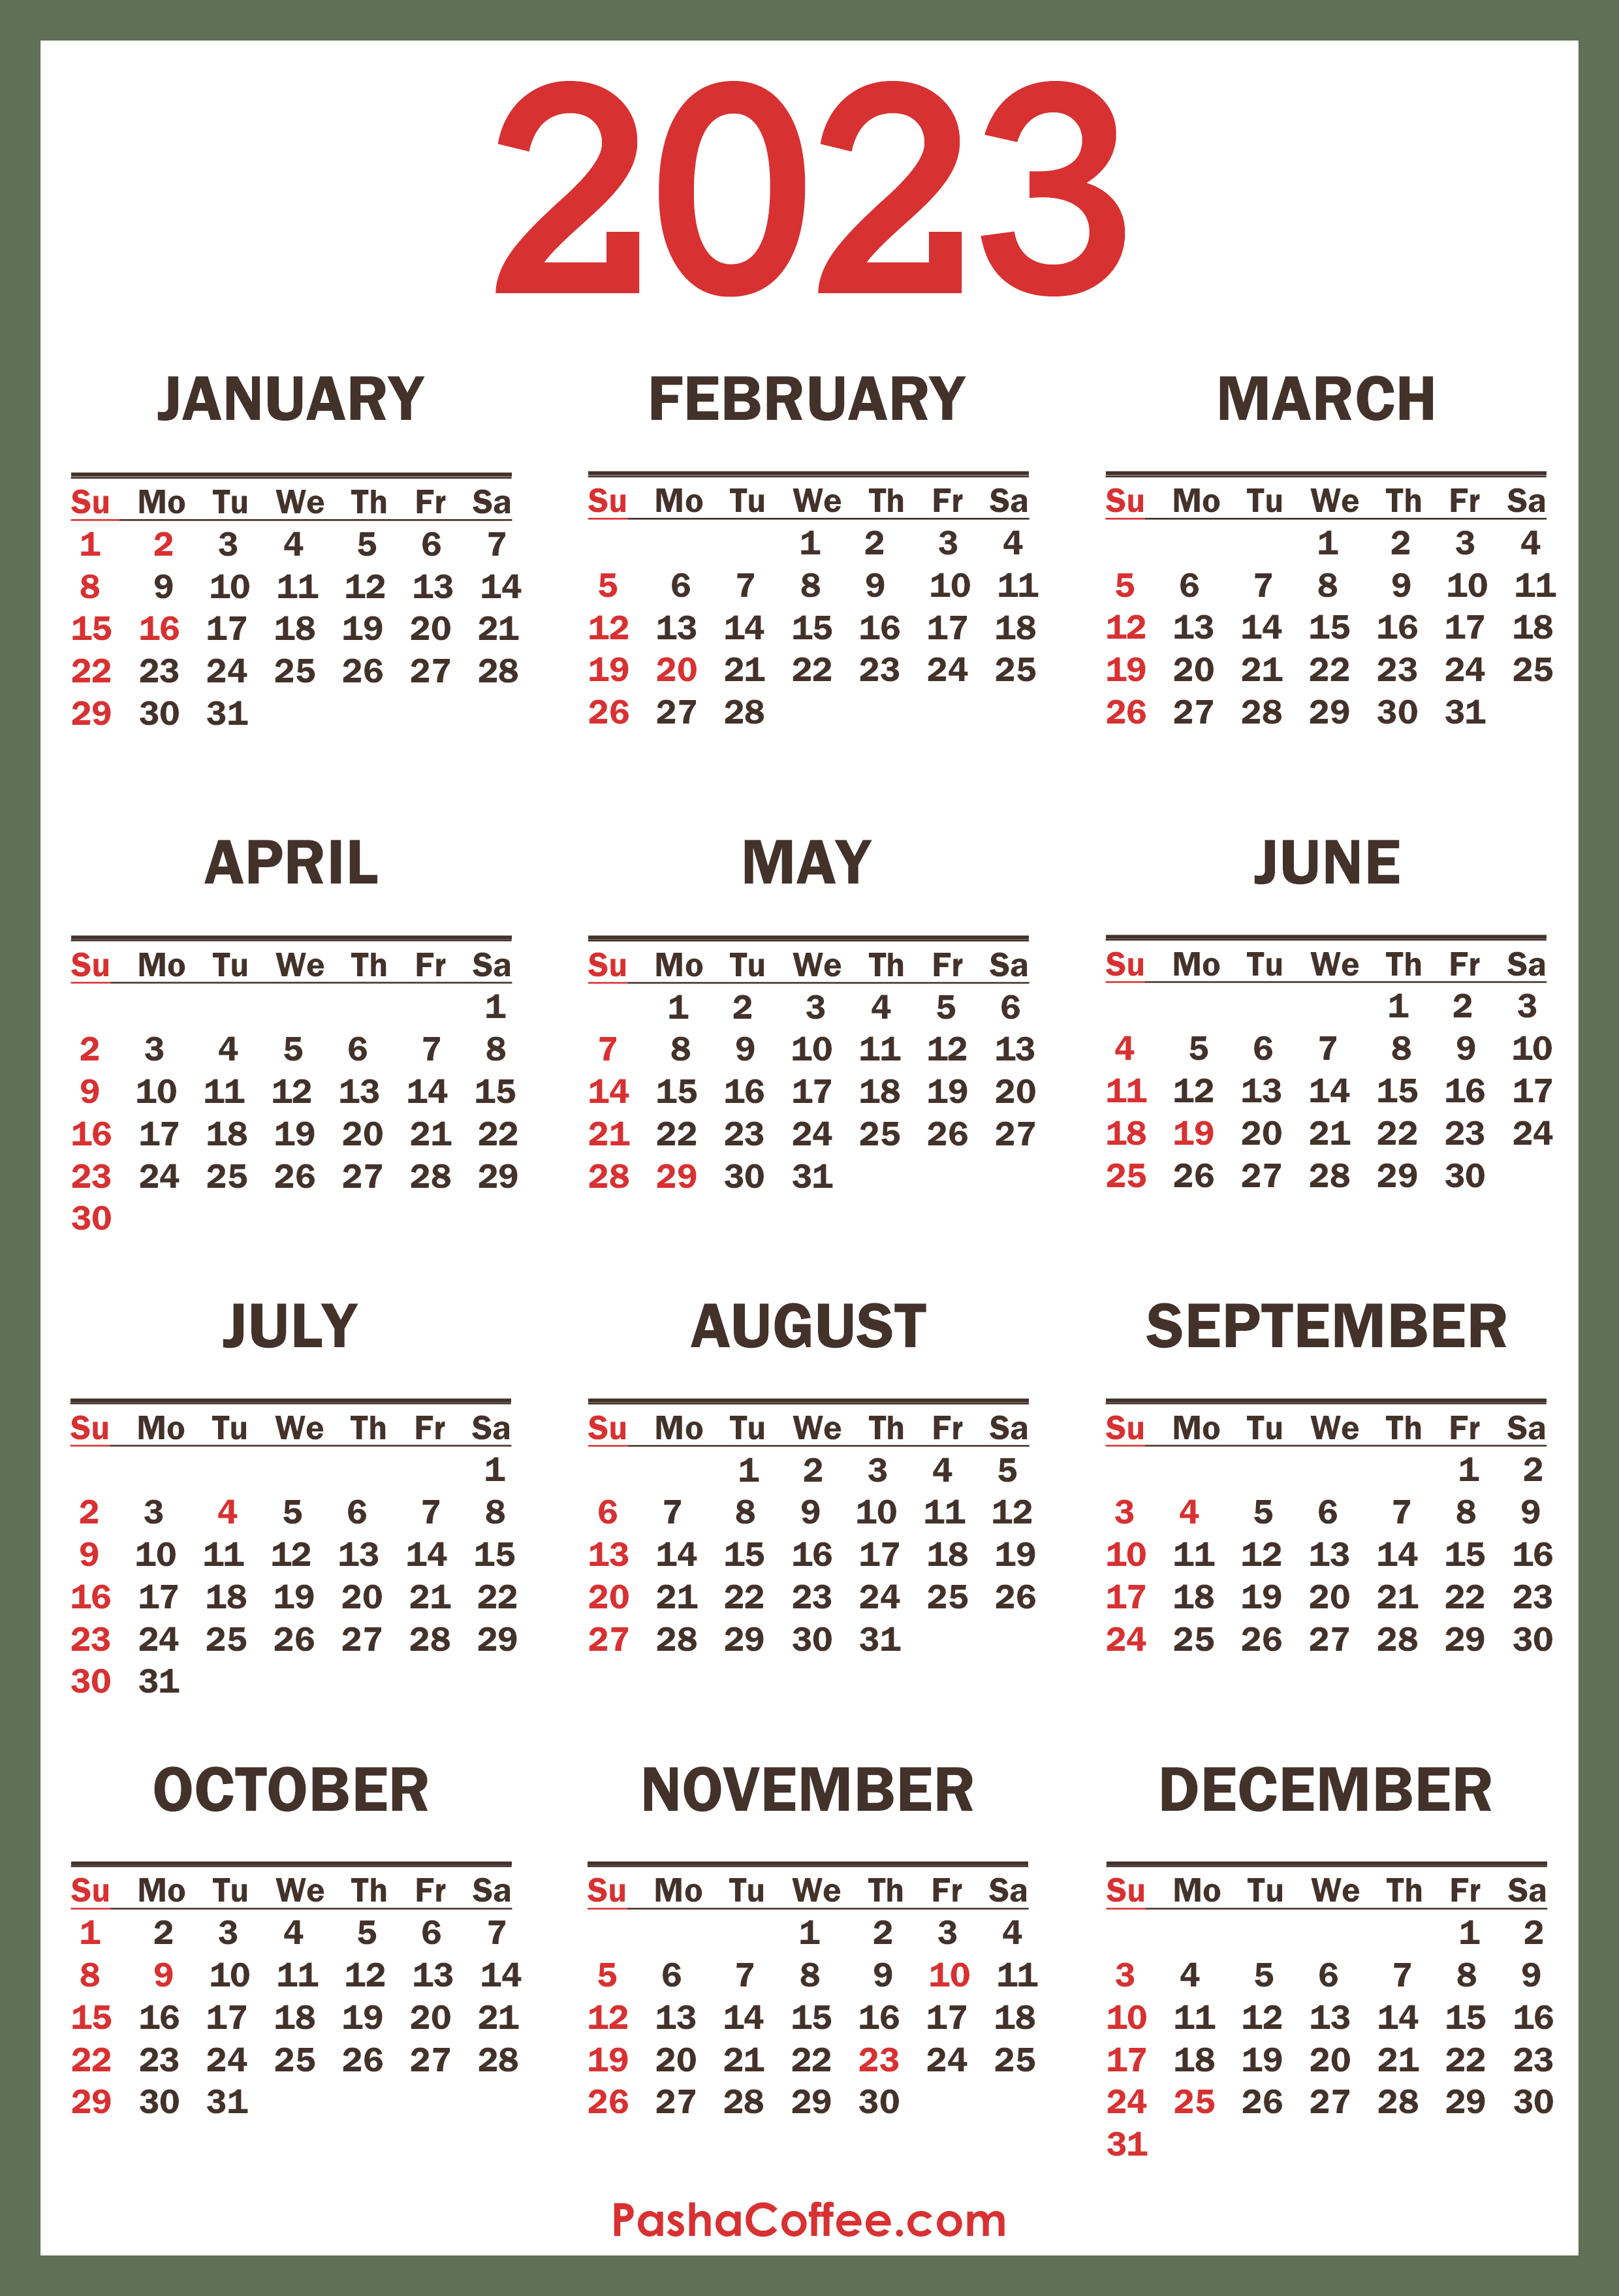 papertraildesign-2023-calendar-printable-calendar-2023